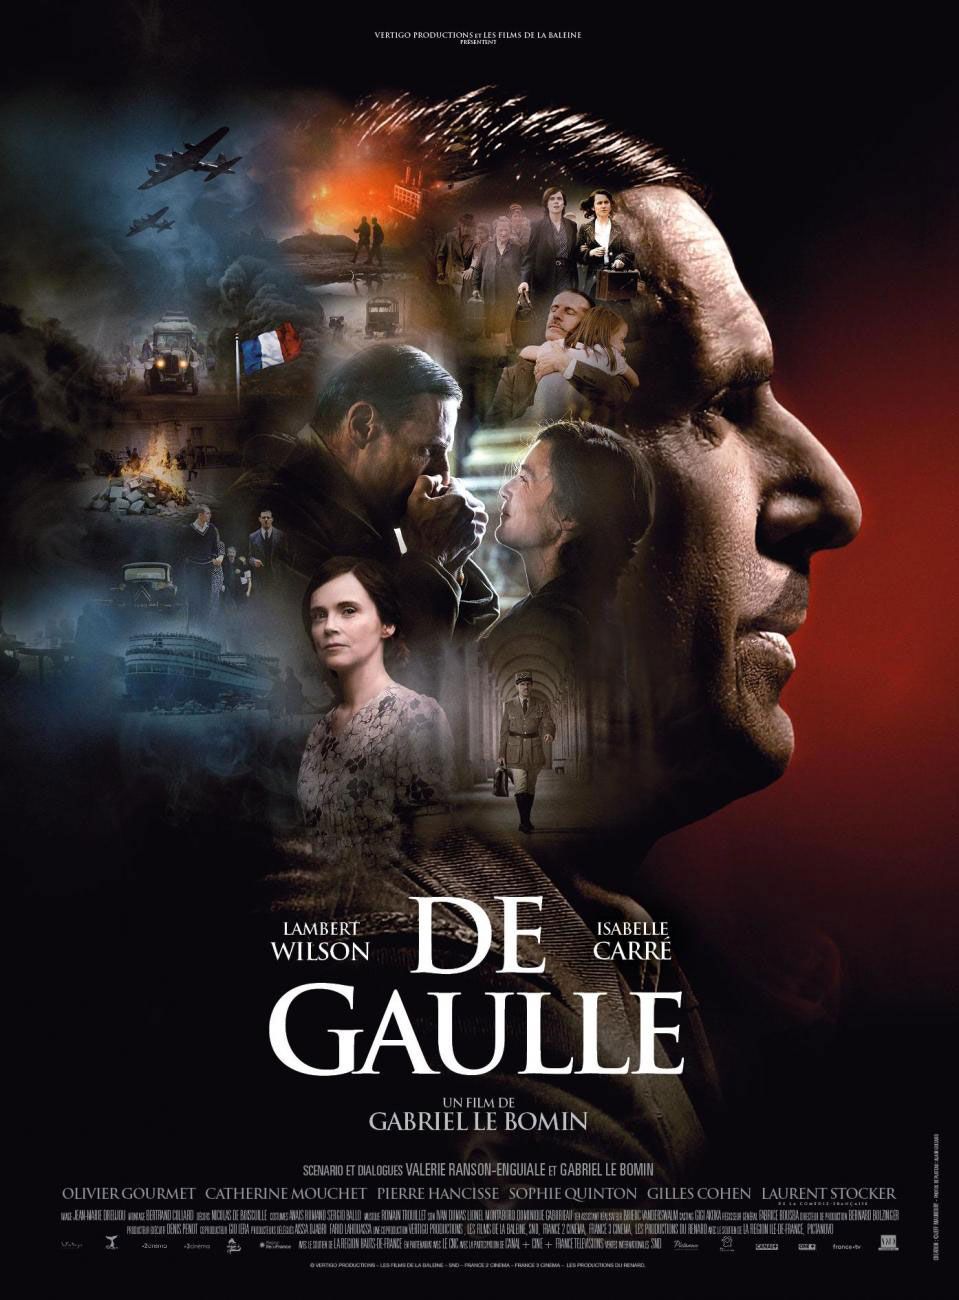 De Gaulle - Film (2020) streaming VF gratuit complet